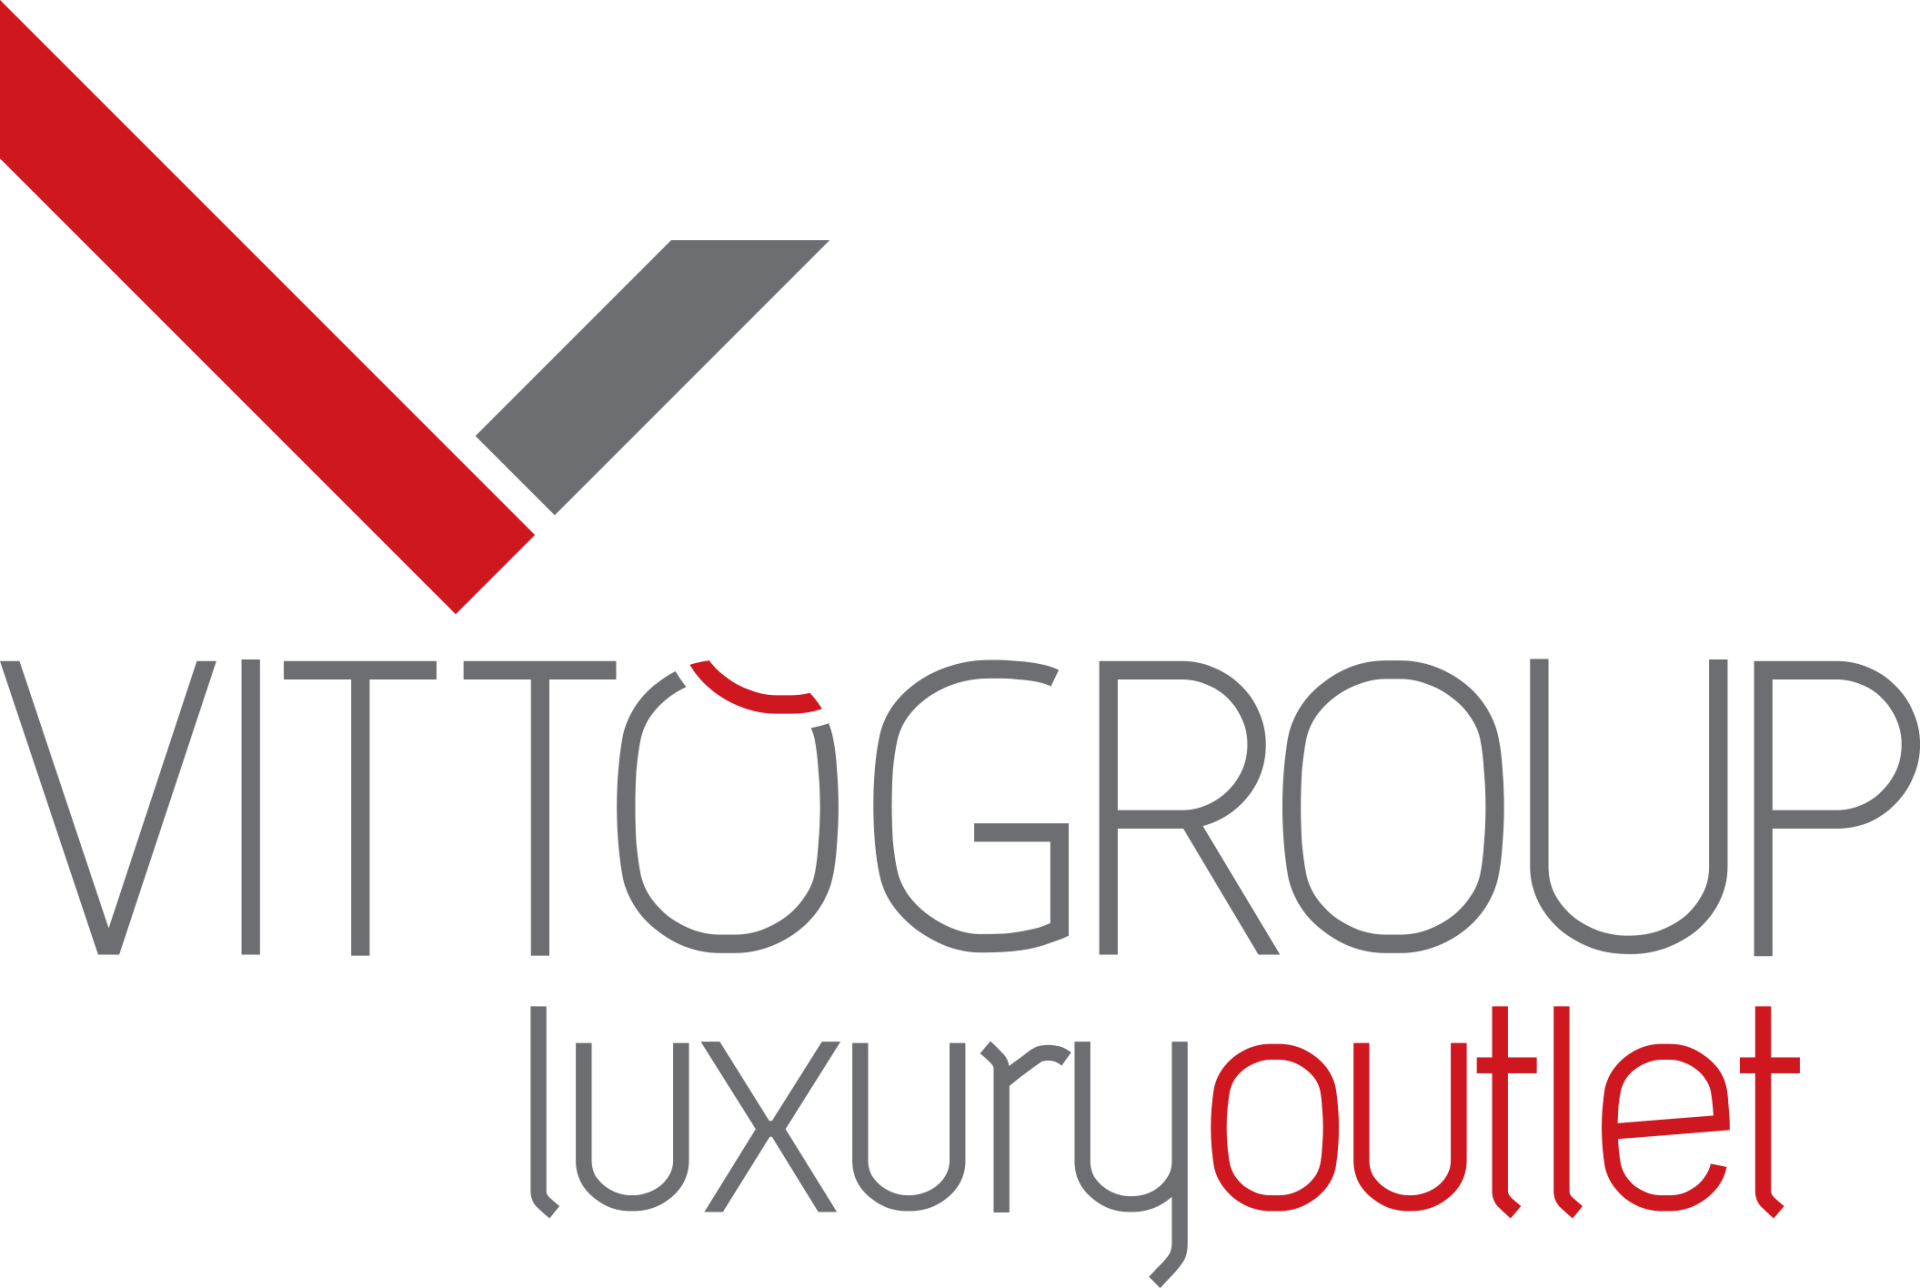 Abiti eleganti firmati | Bari | Vittò Group Luxury Outlet